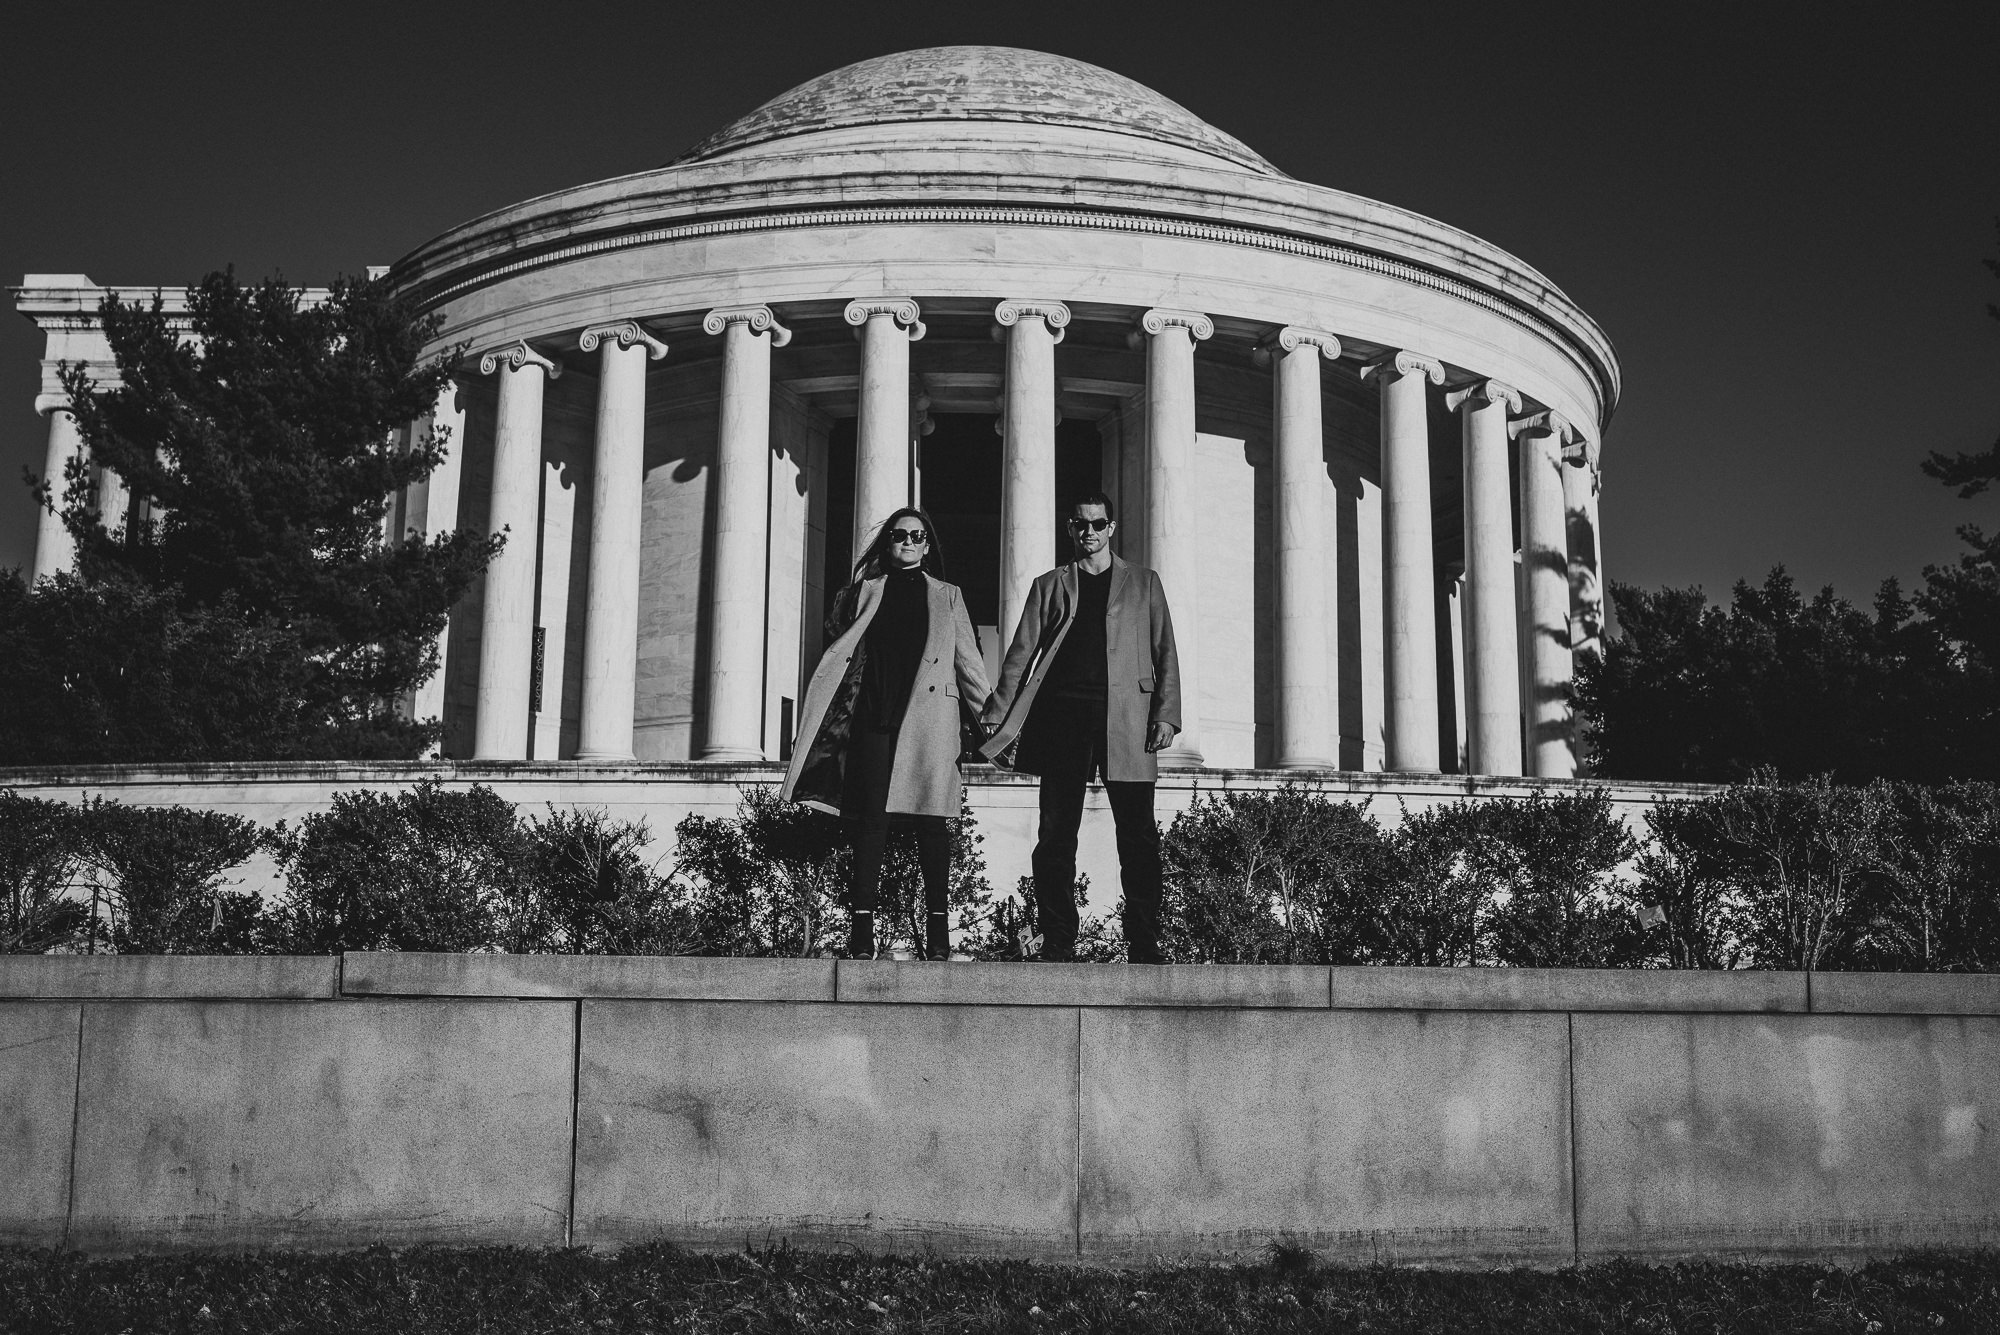 Jefferson Memorial Washington DC Engagement Session by Mantas Kubilinskas.jpg